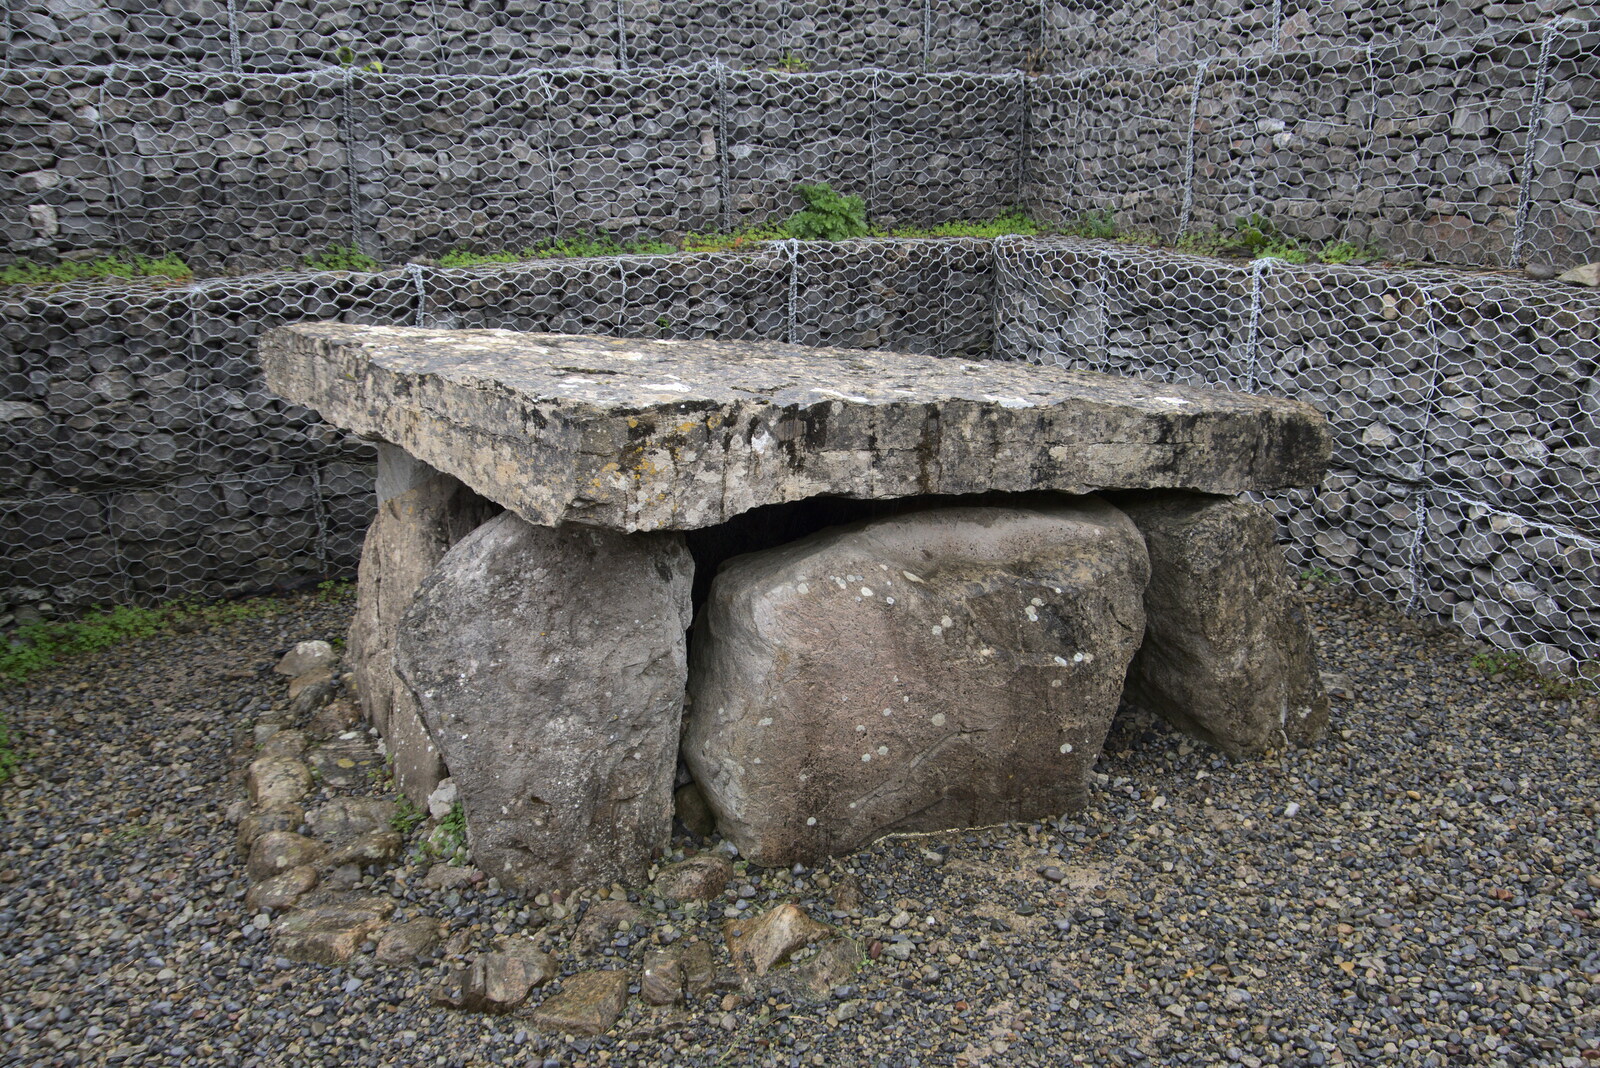 The Carrowmore passage grave from Walks Around Benbulben and Carrowmore, County Sligo, Ireland - 13th August 2021